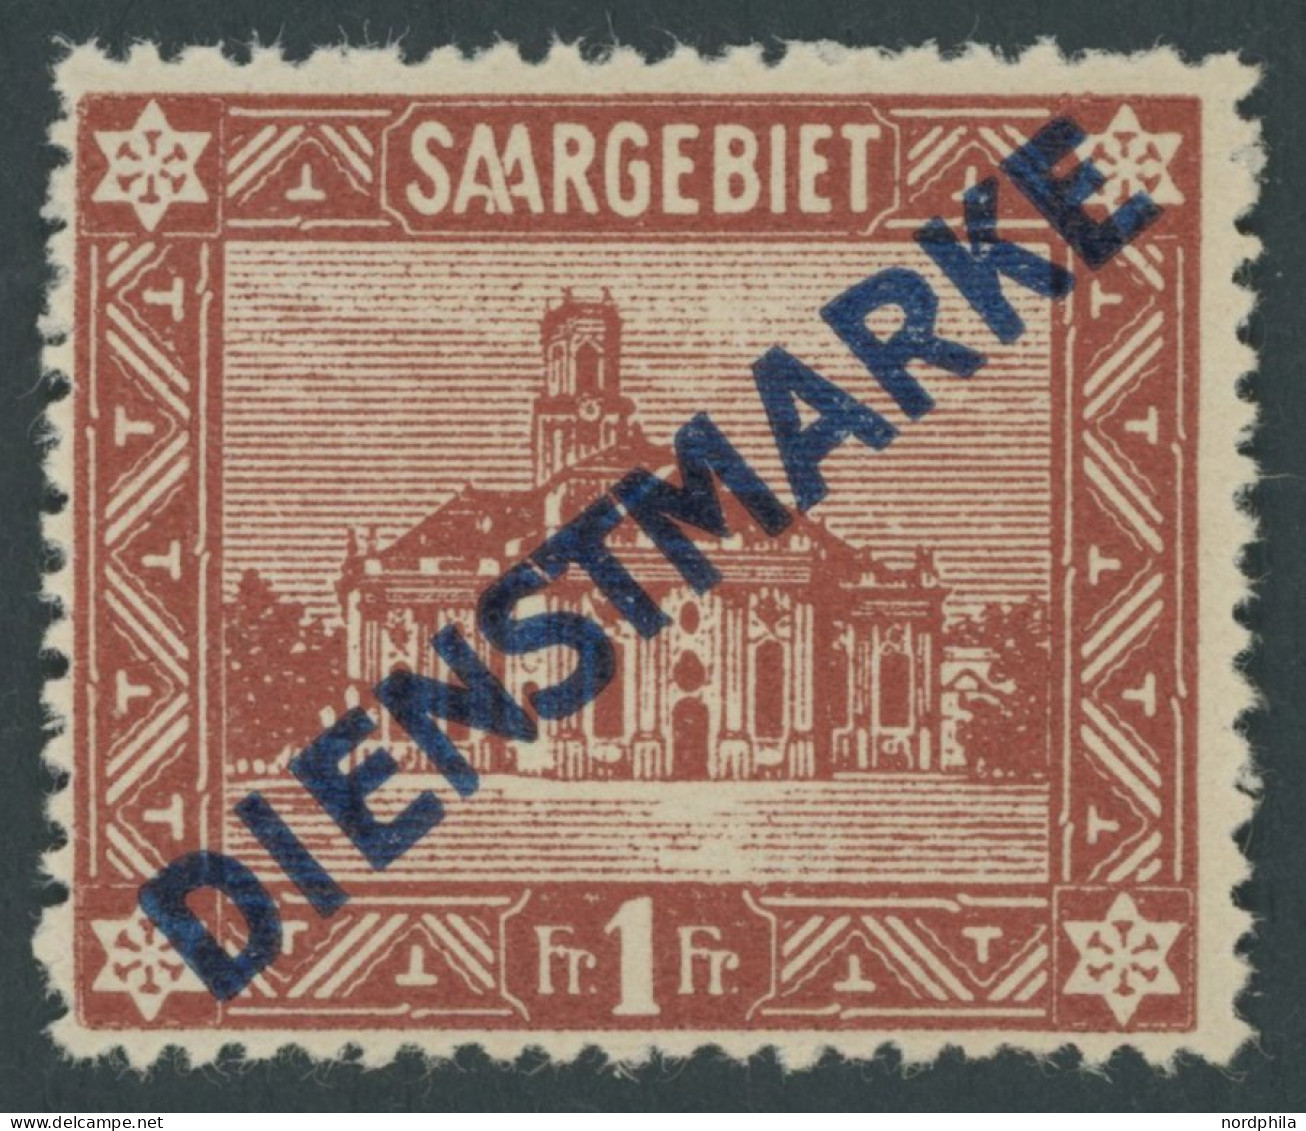 SAARGEBIET D 11I , 1922, 1 Fr. Ludwigskirche, Type I, Postfrisch, Pracht, Mi. 180.- - Service